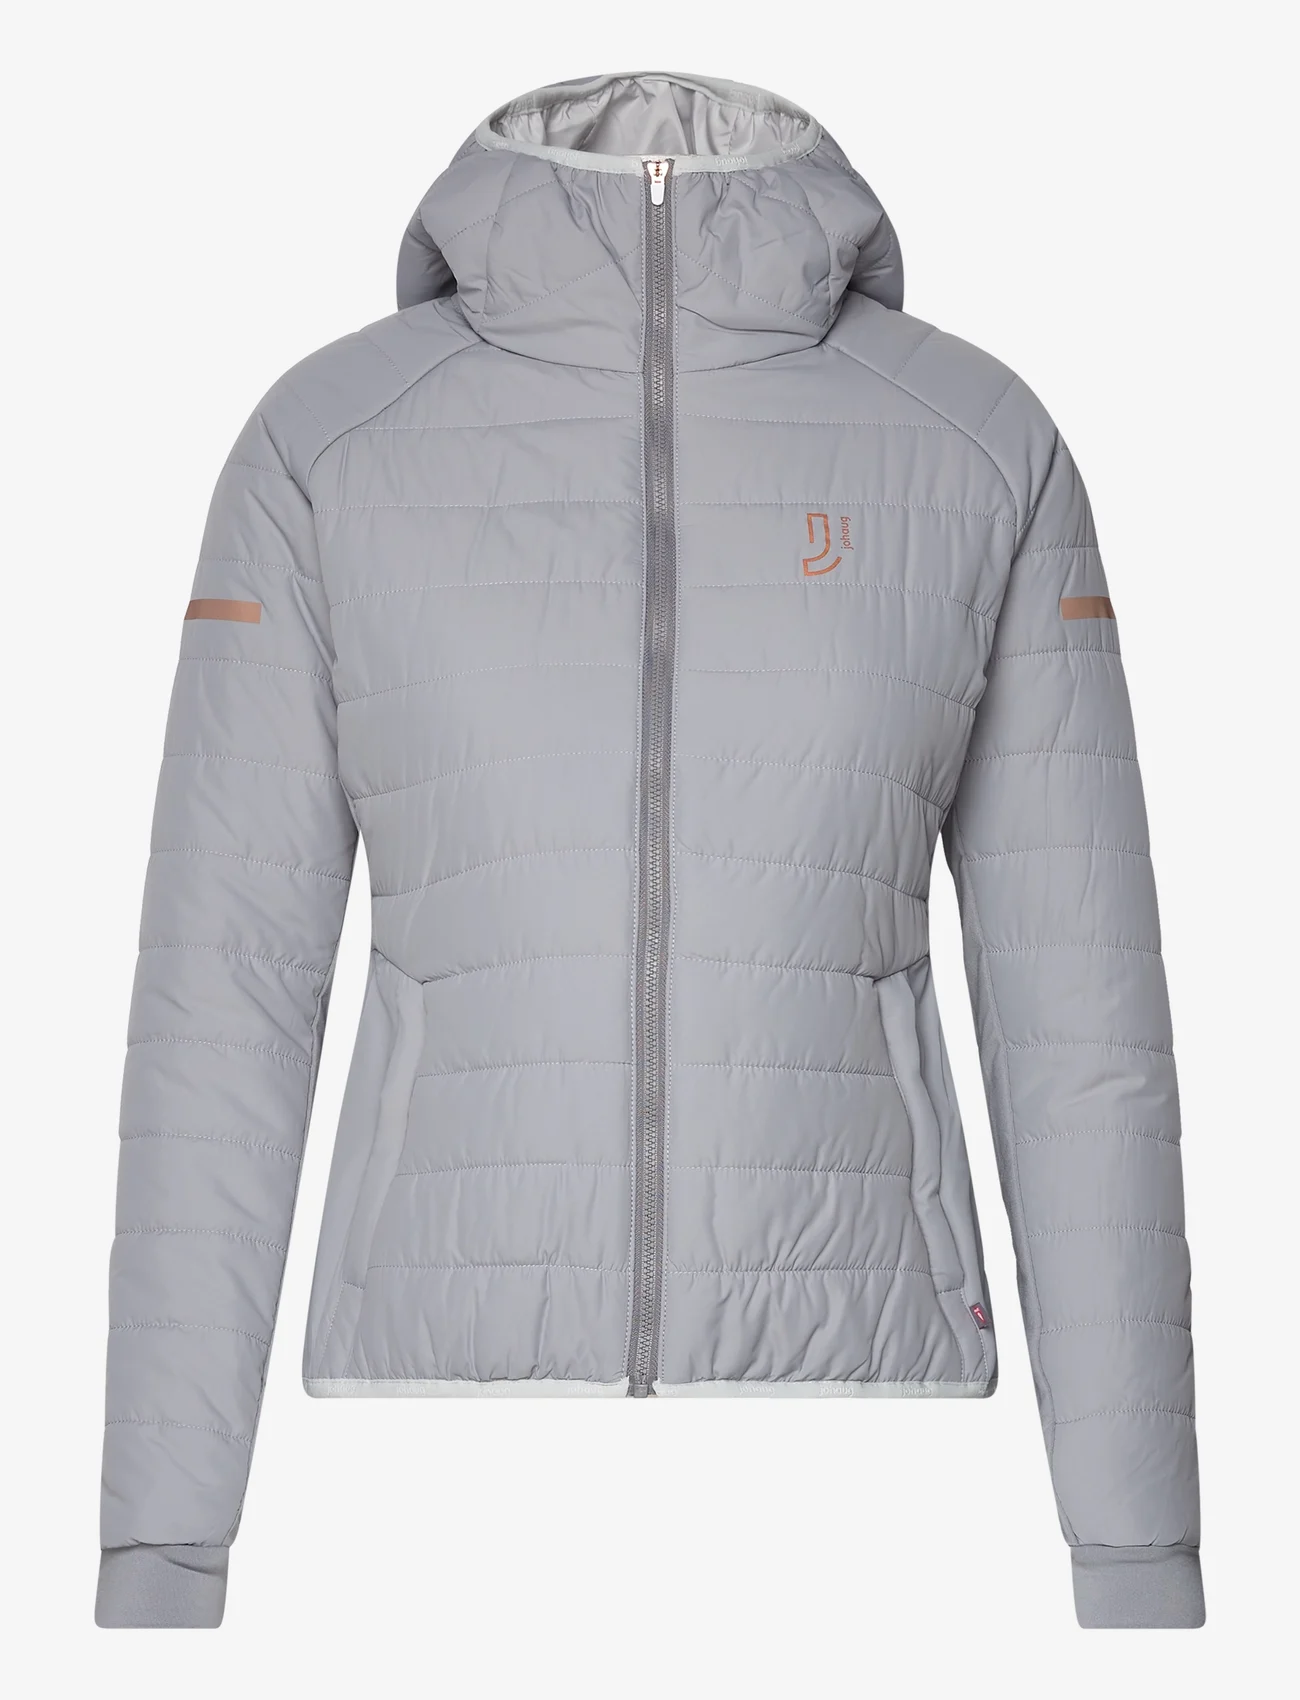 Johaug - Zone Primaloft Jacket - skidjackor - light grey - 0